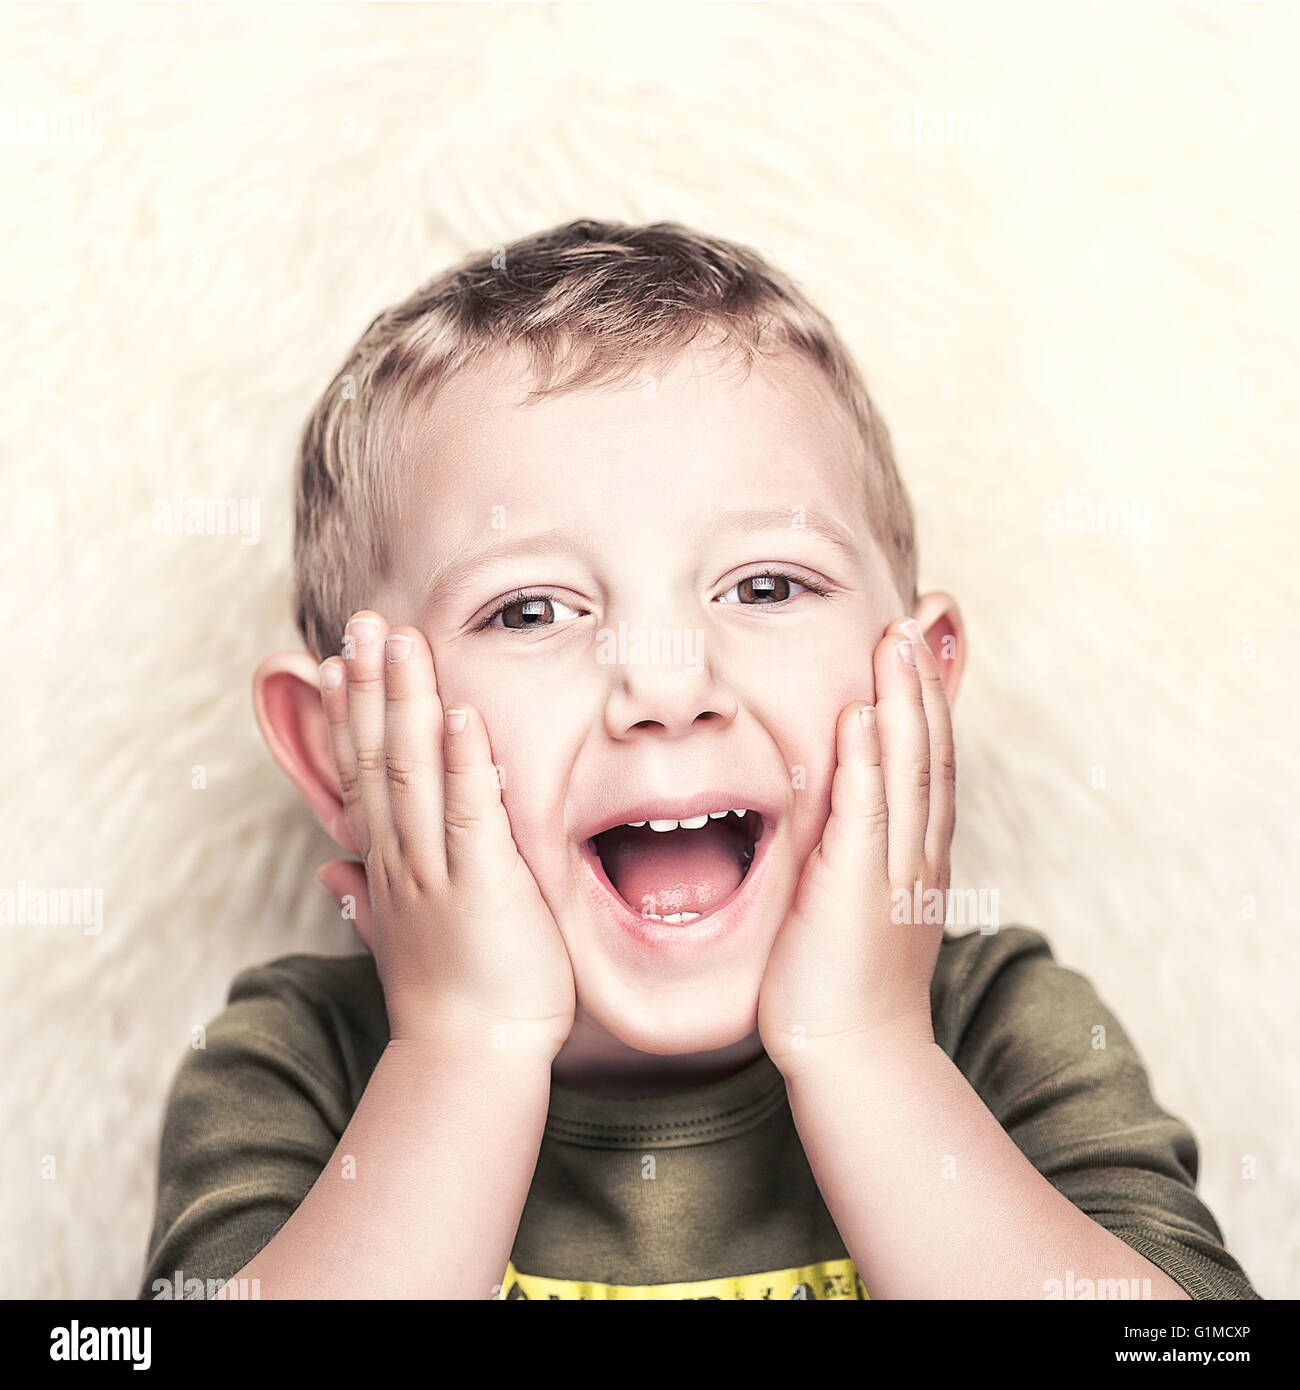 happy child portrait and fur background Stock Photo